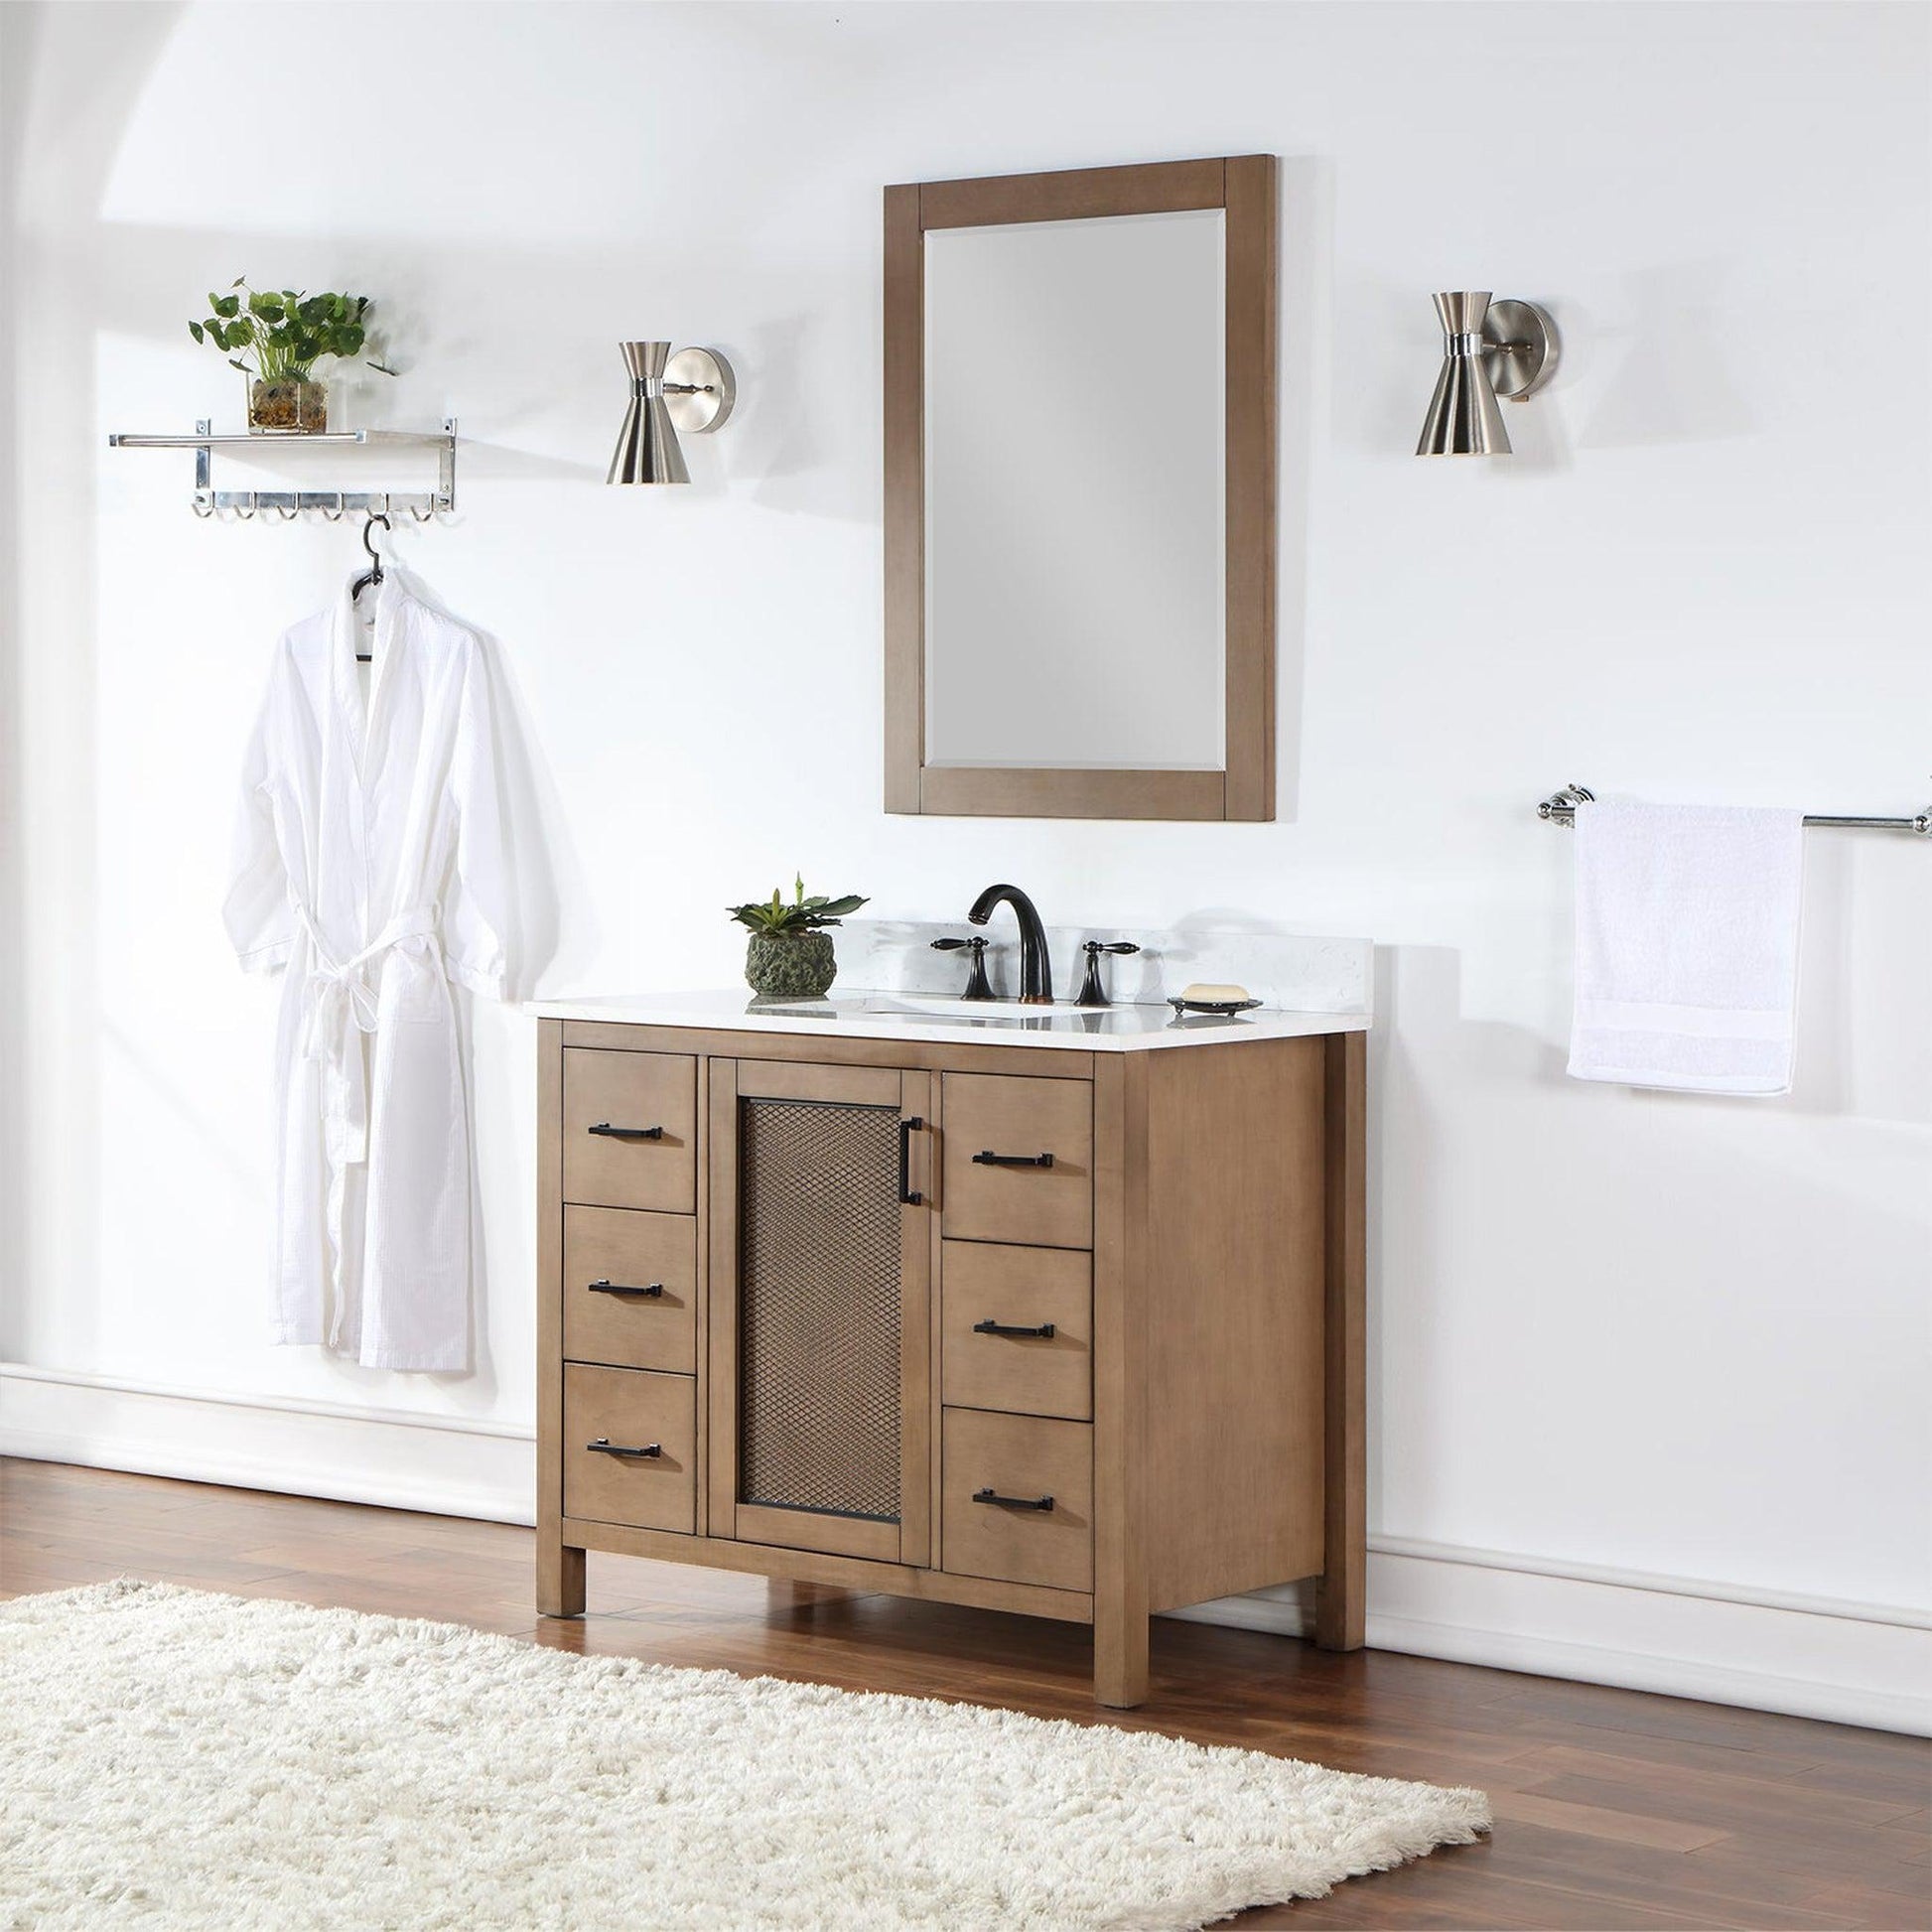 Altair Hadiya 42" Single Brown Pine Freestanding Bathroom Vanity Set With Mirror, Elegant Aosta White Composite Stone Top, Rectangular Undermount Ceramic Sink, Overflow, and Backsplash